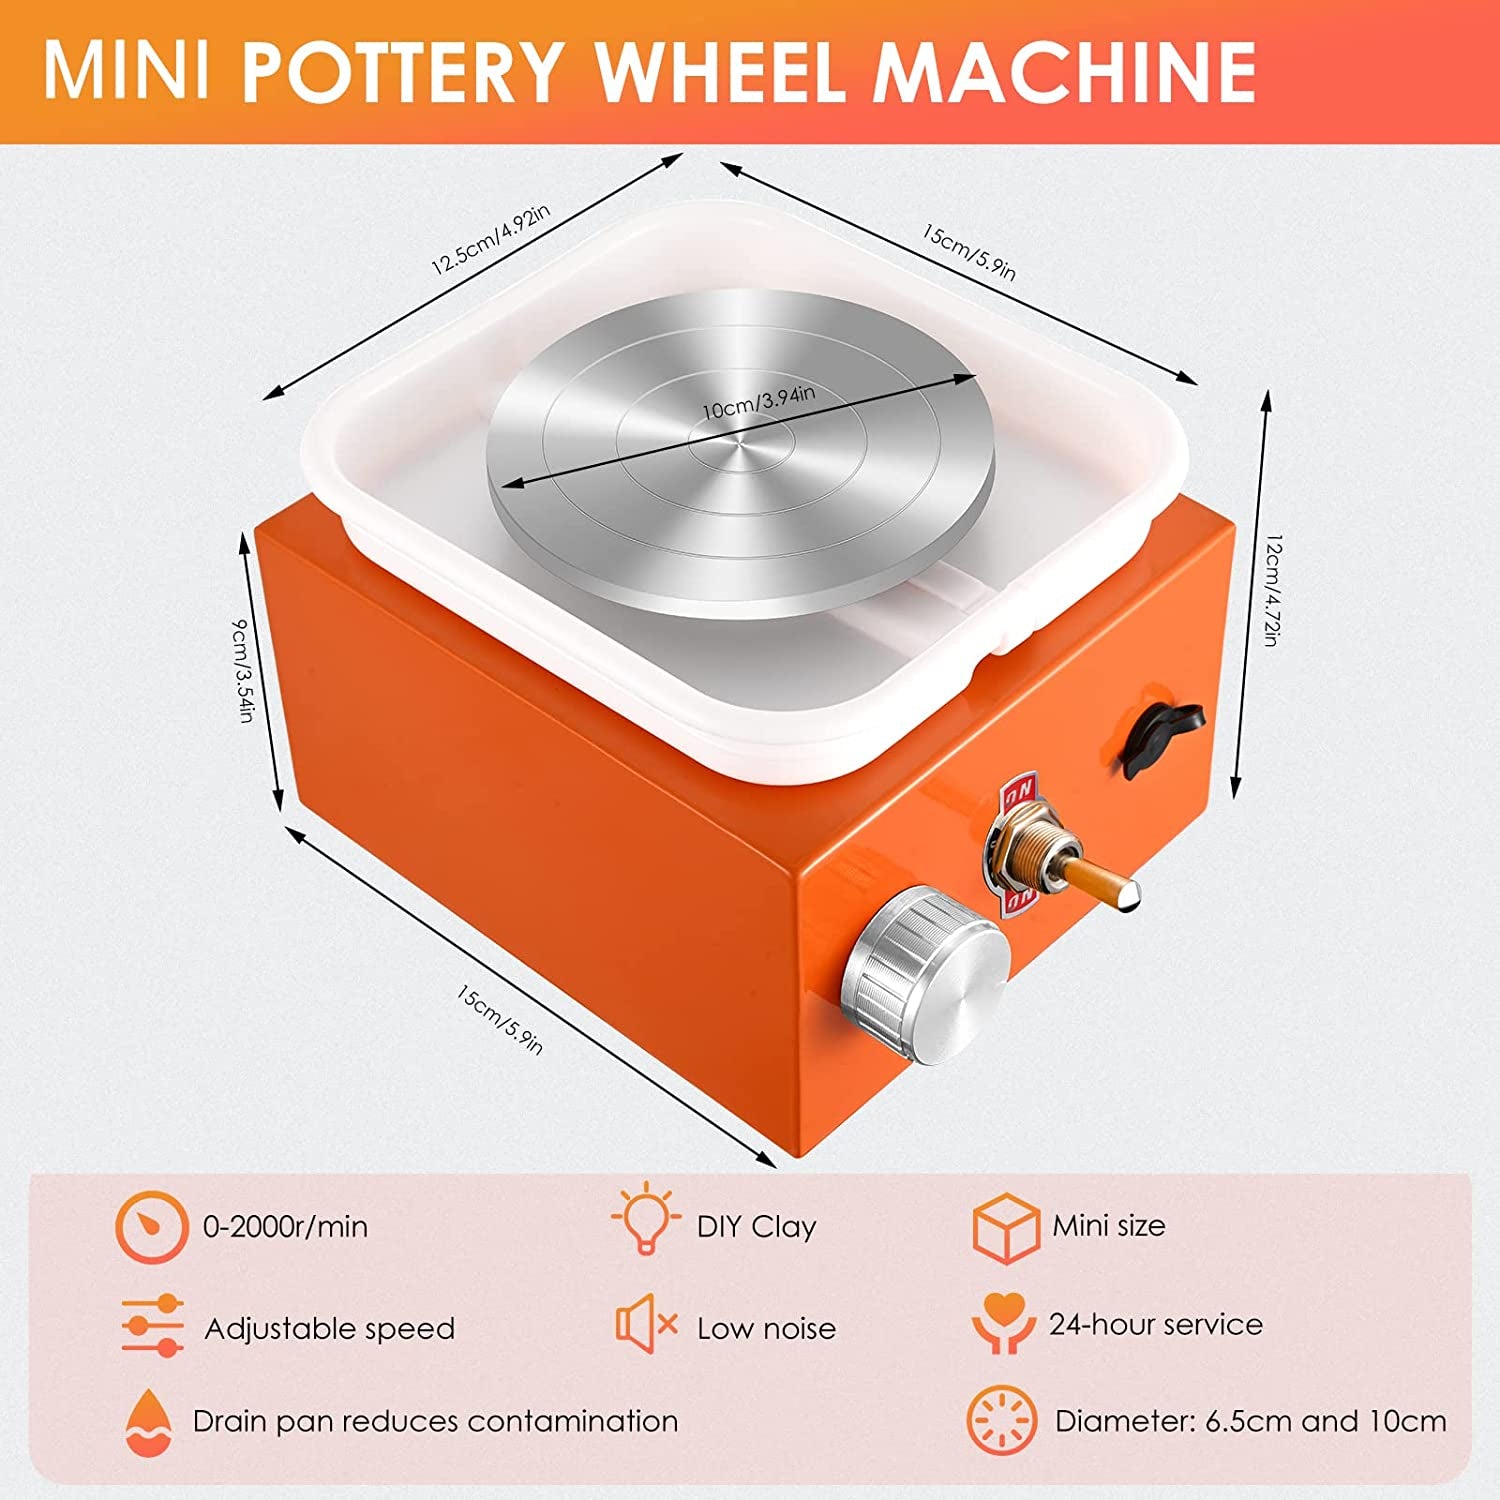 Mini Pottery Wheel Machine